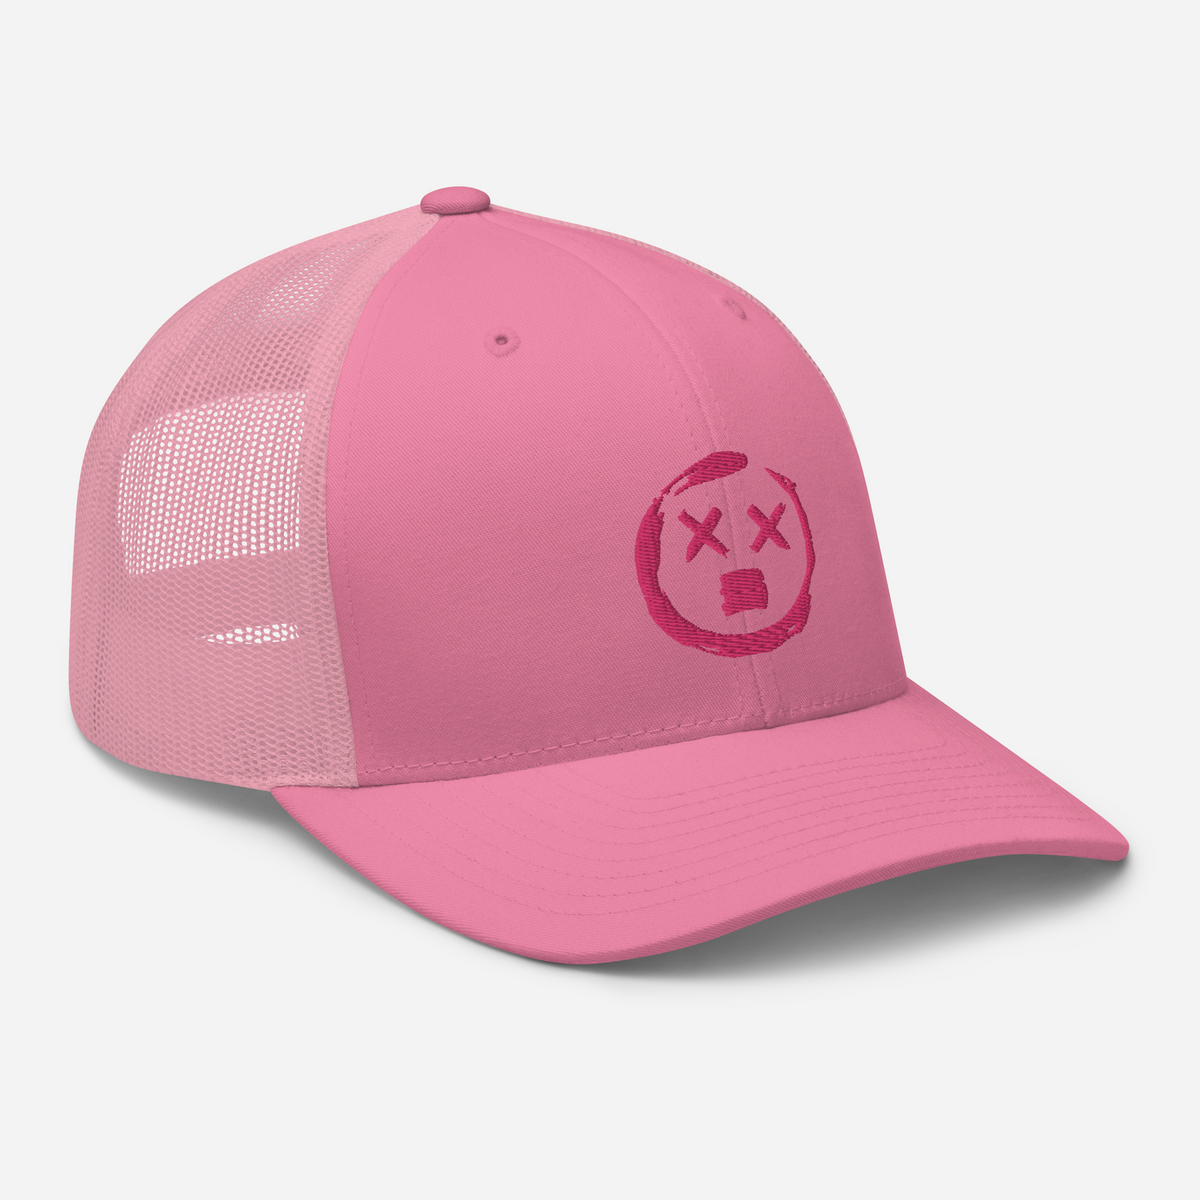 Trucker-Cap - Bestickt, Eyes XX, No Sleep (Nessun Dorma), pink pink